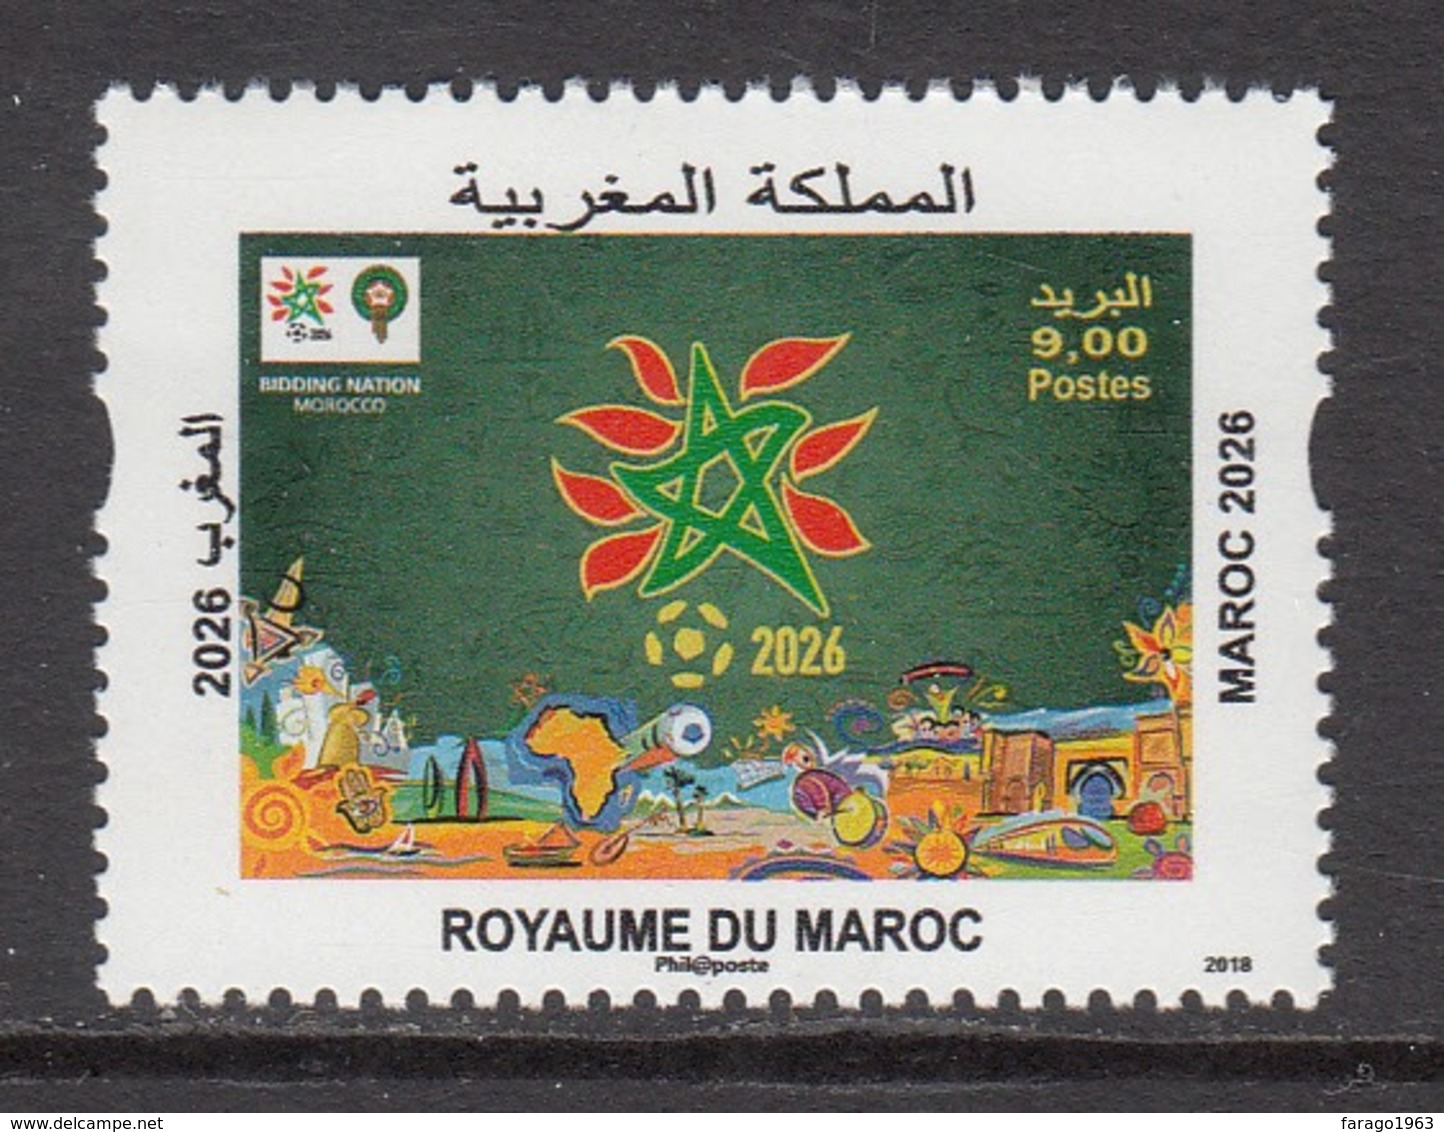 2018 Morocco Maroc 2026 National Plan   Complete Set Of 1 MNH - Morocco (1956-...)